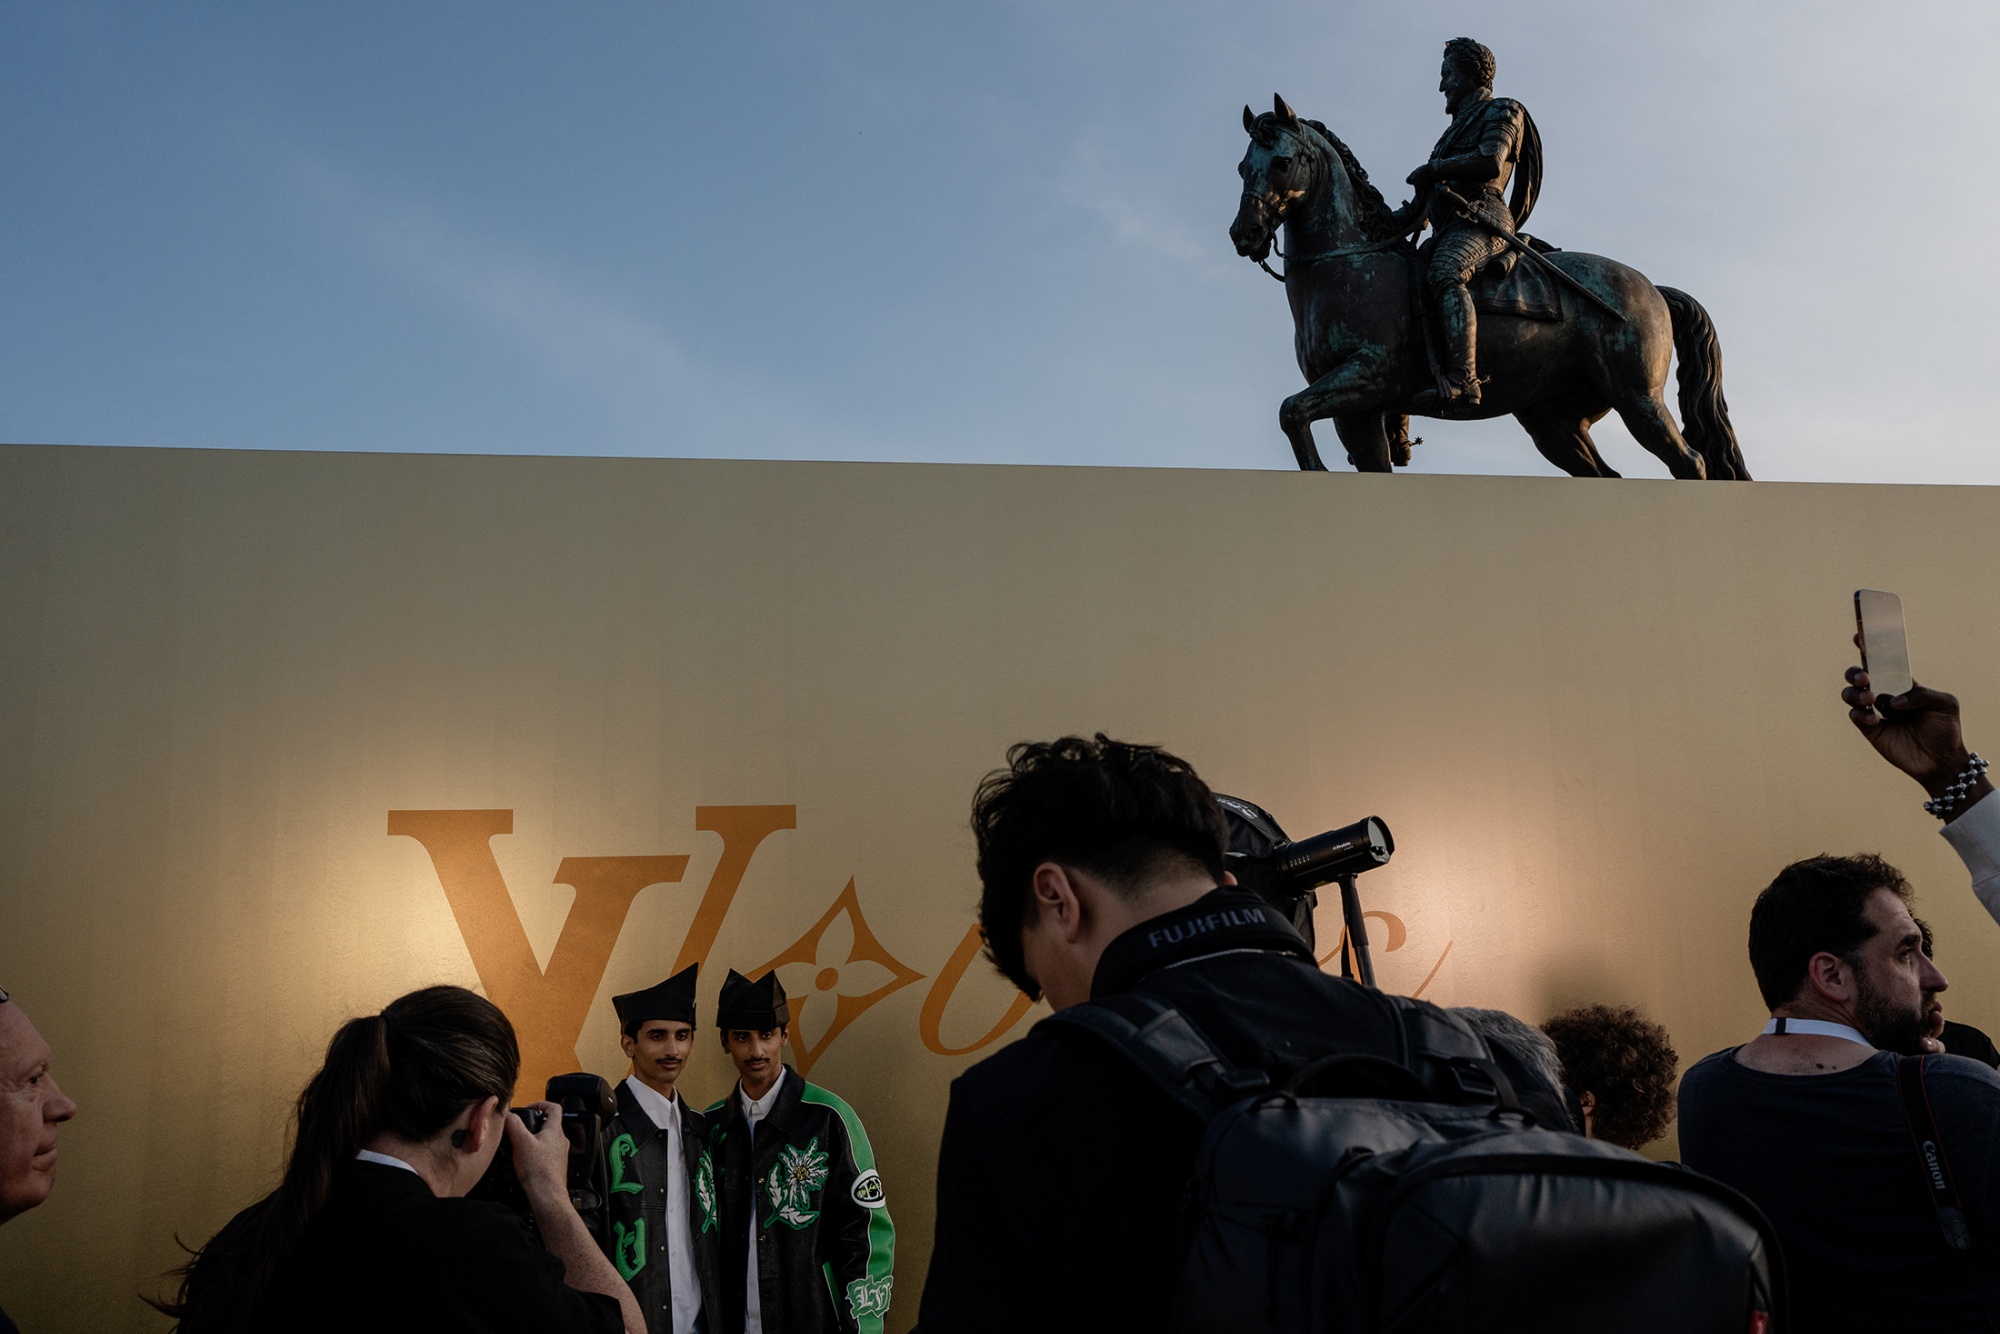 Next stop, Louis Vuitton – The Humble Fabulist